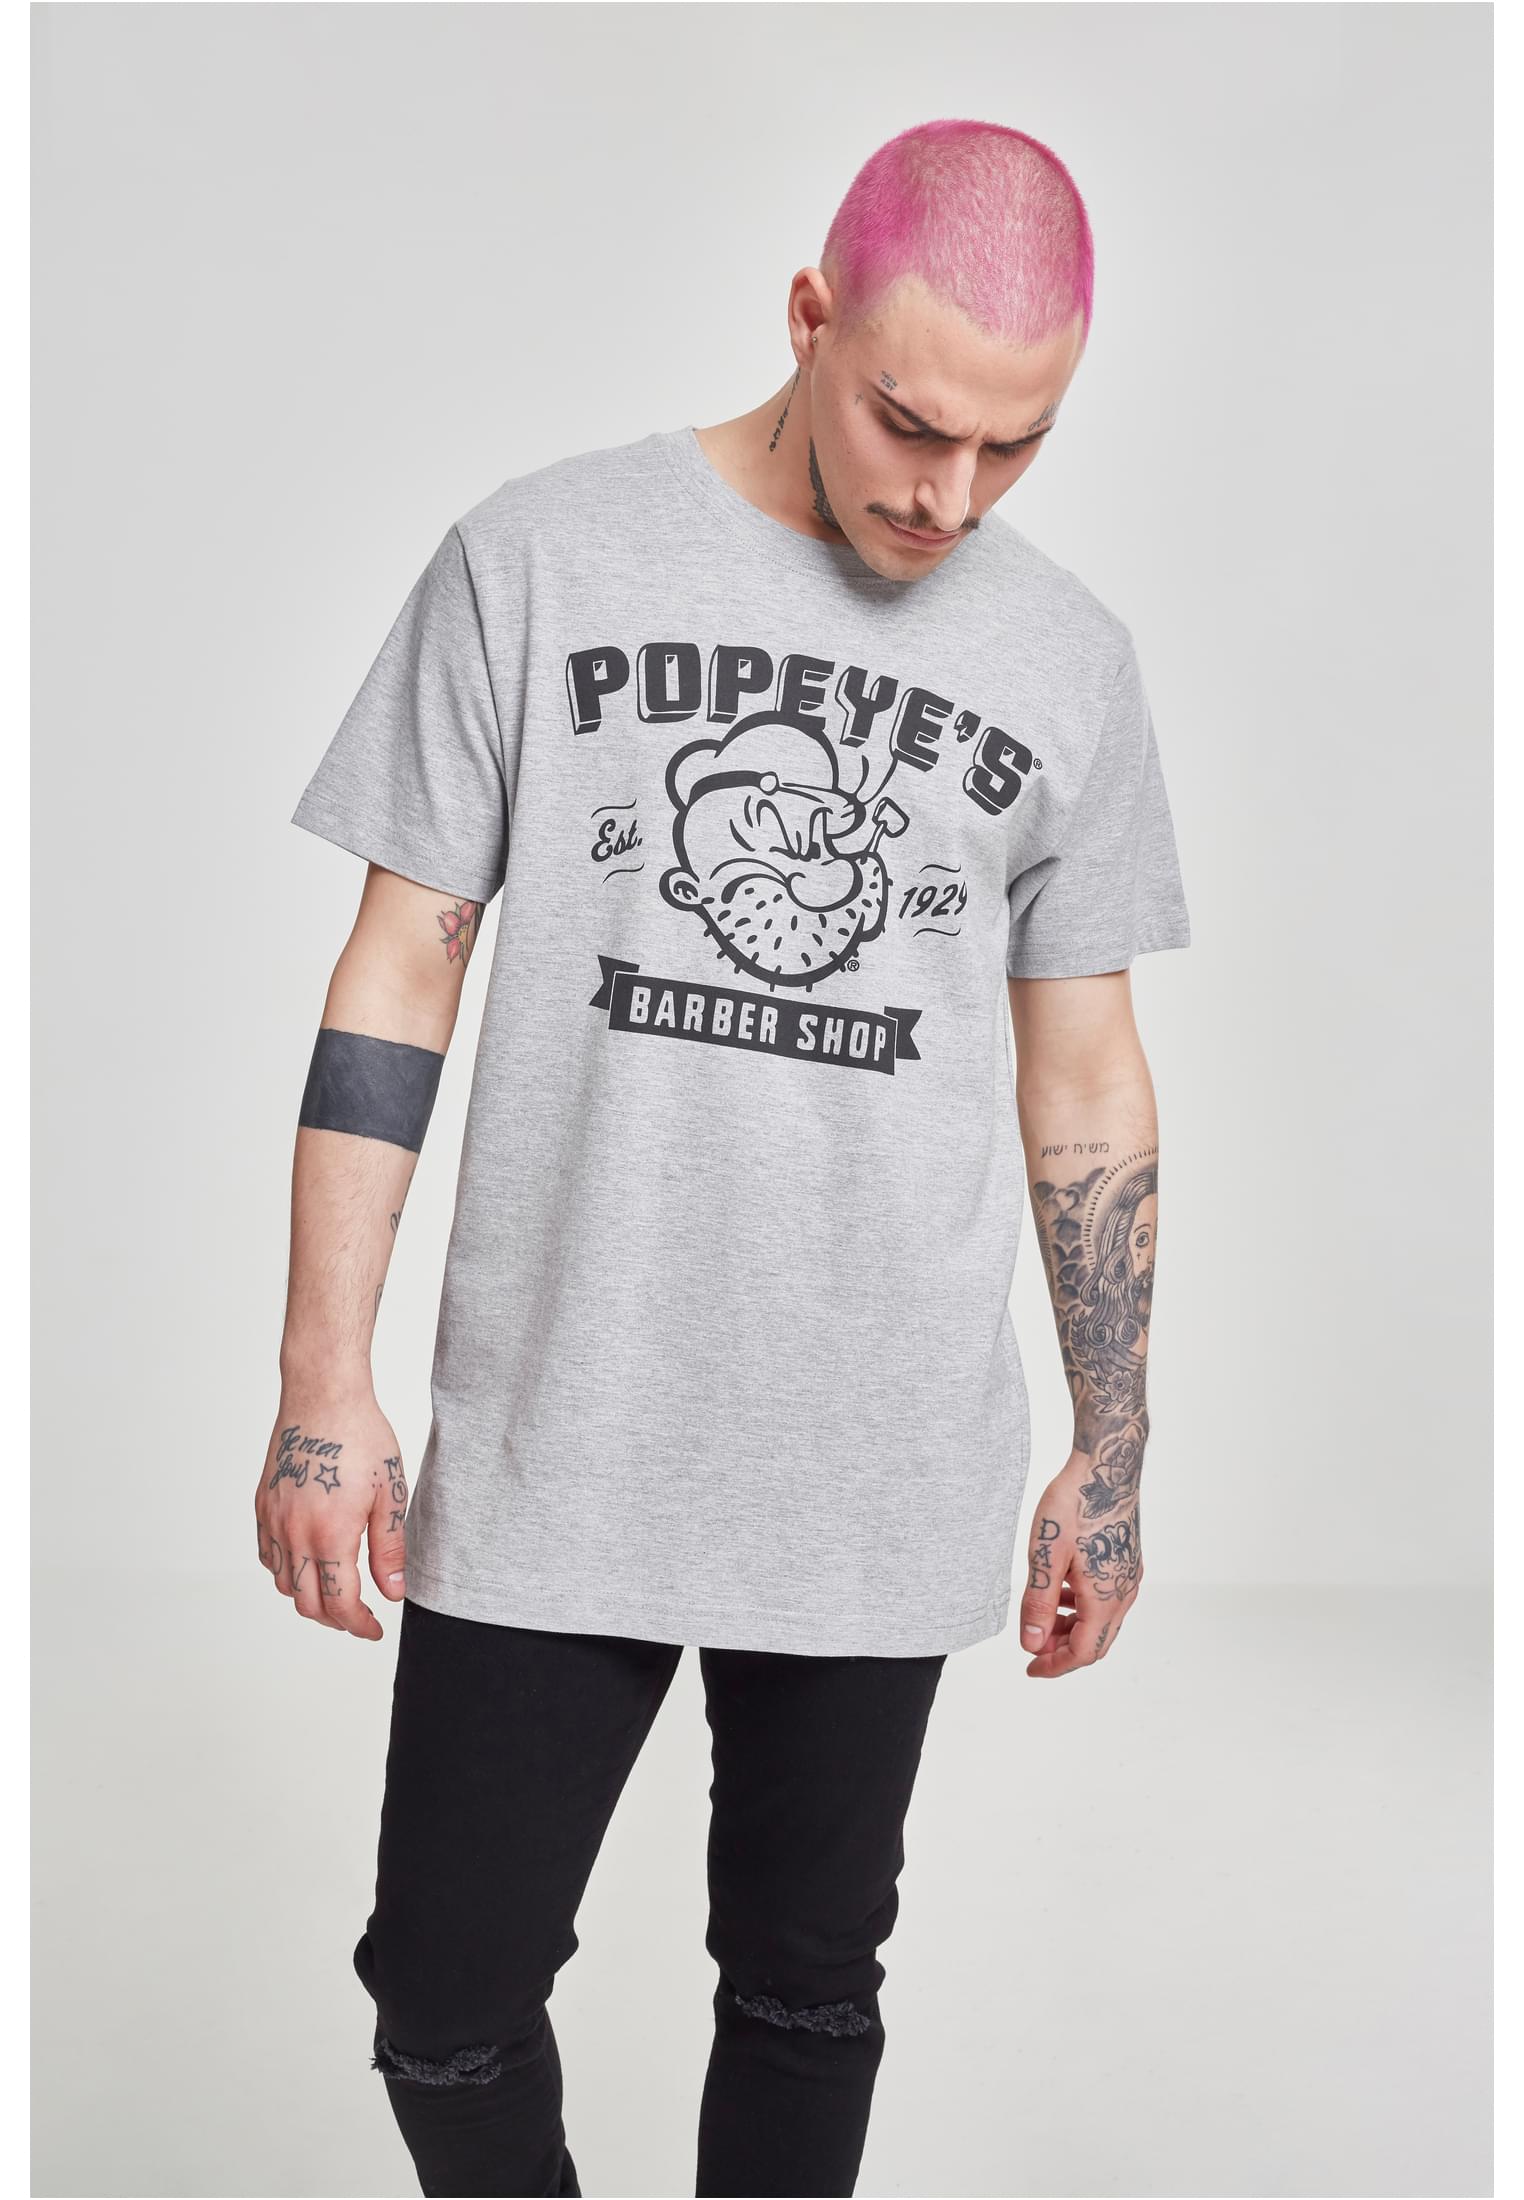 T-Shirts Popeye Barber Shop Tee in Farbe heather grey